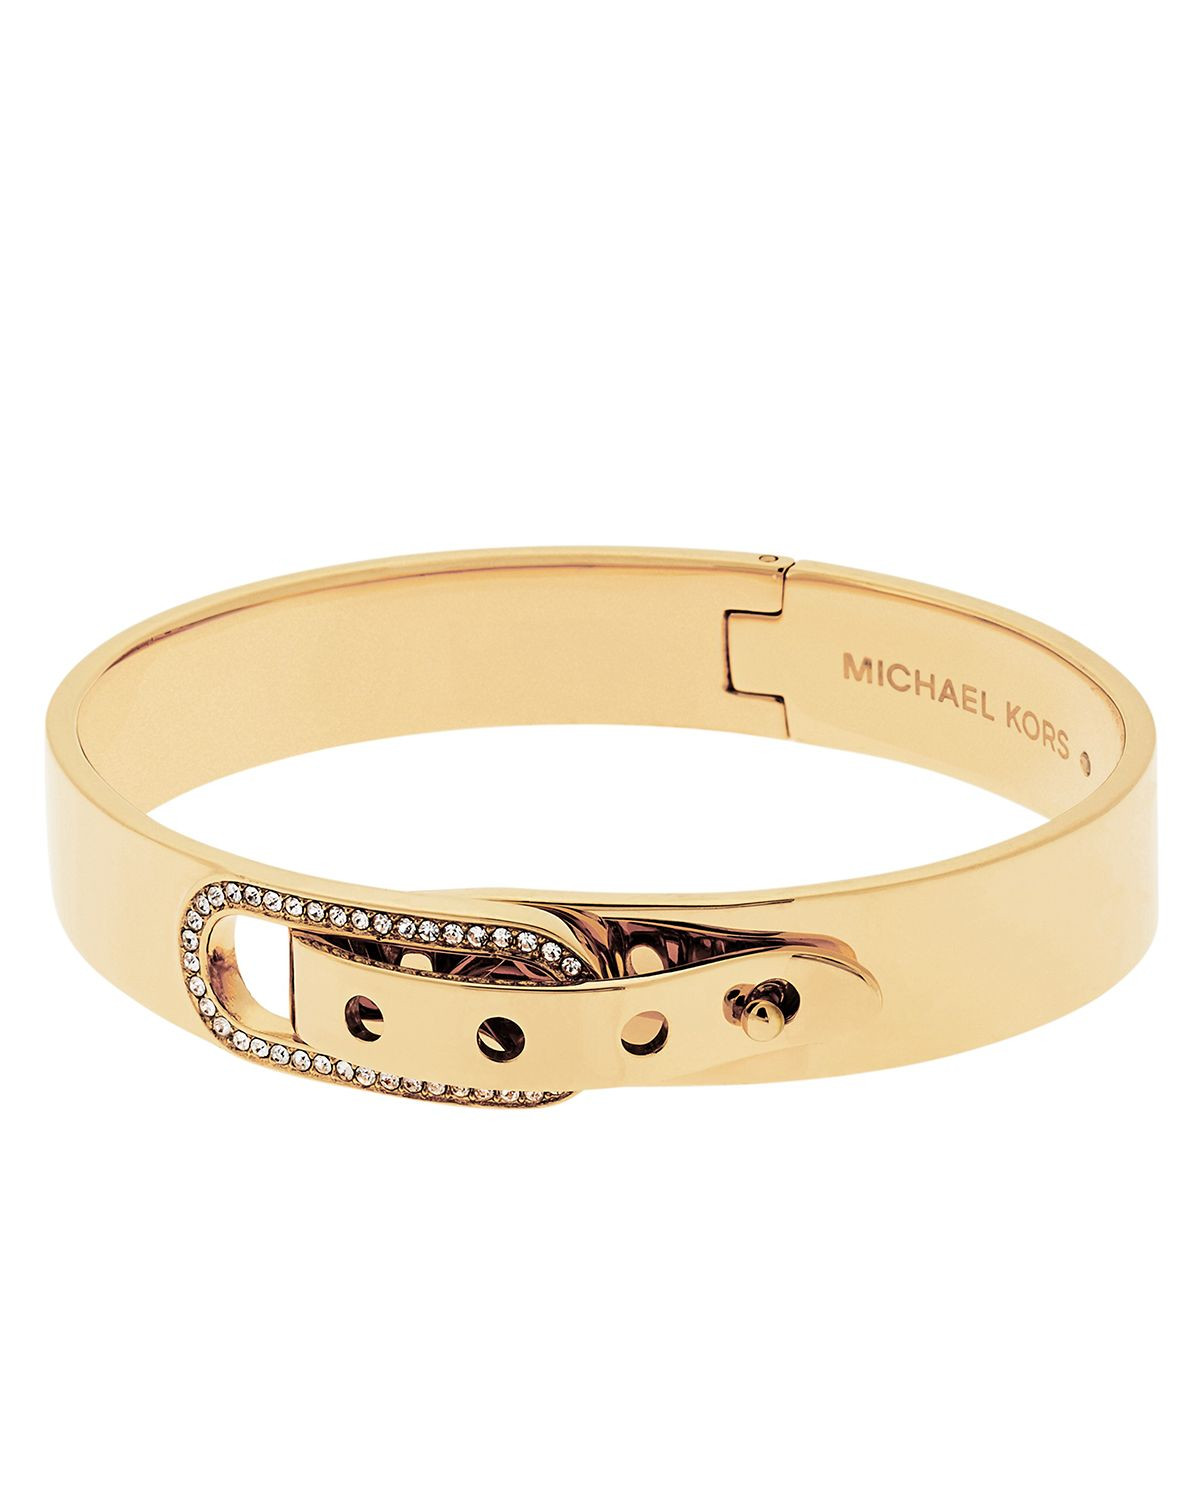 Michael Kors Bracelet
 Michael Kors Pave buckle Bangle Bracelet in Gold